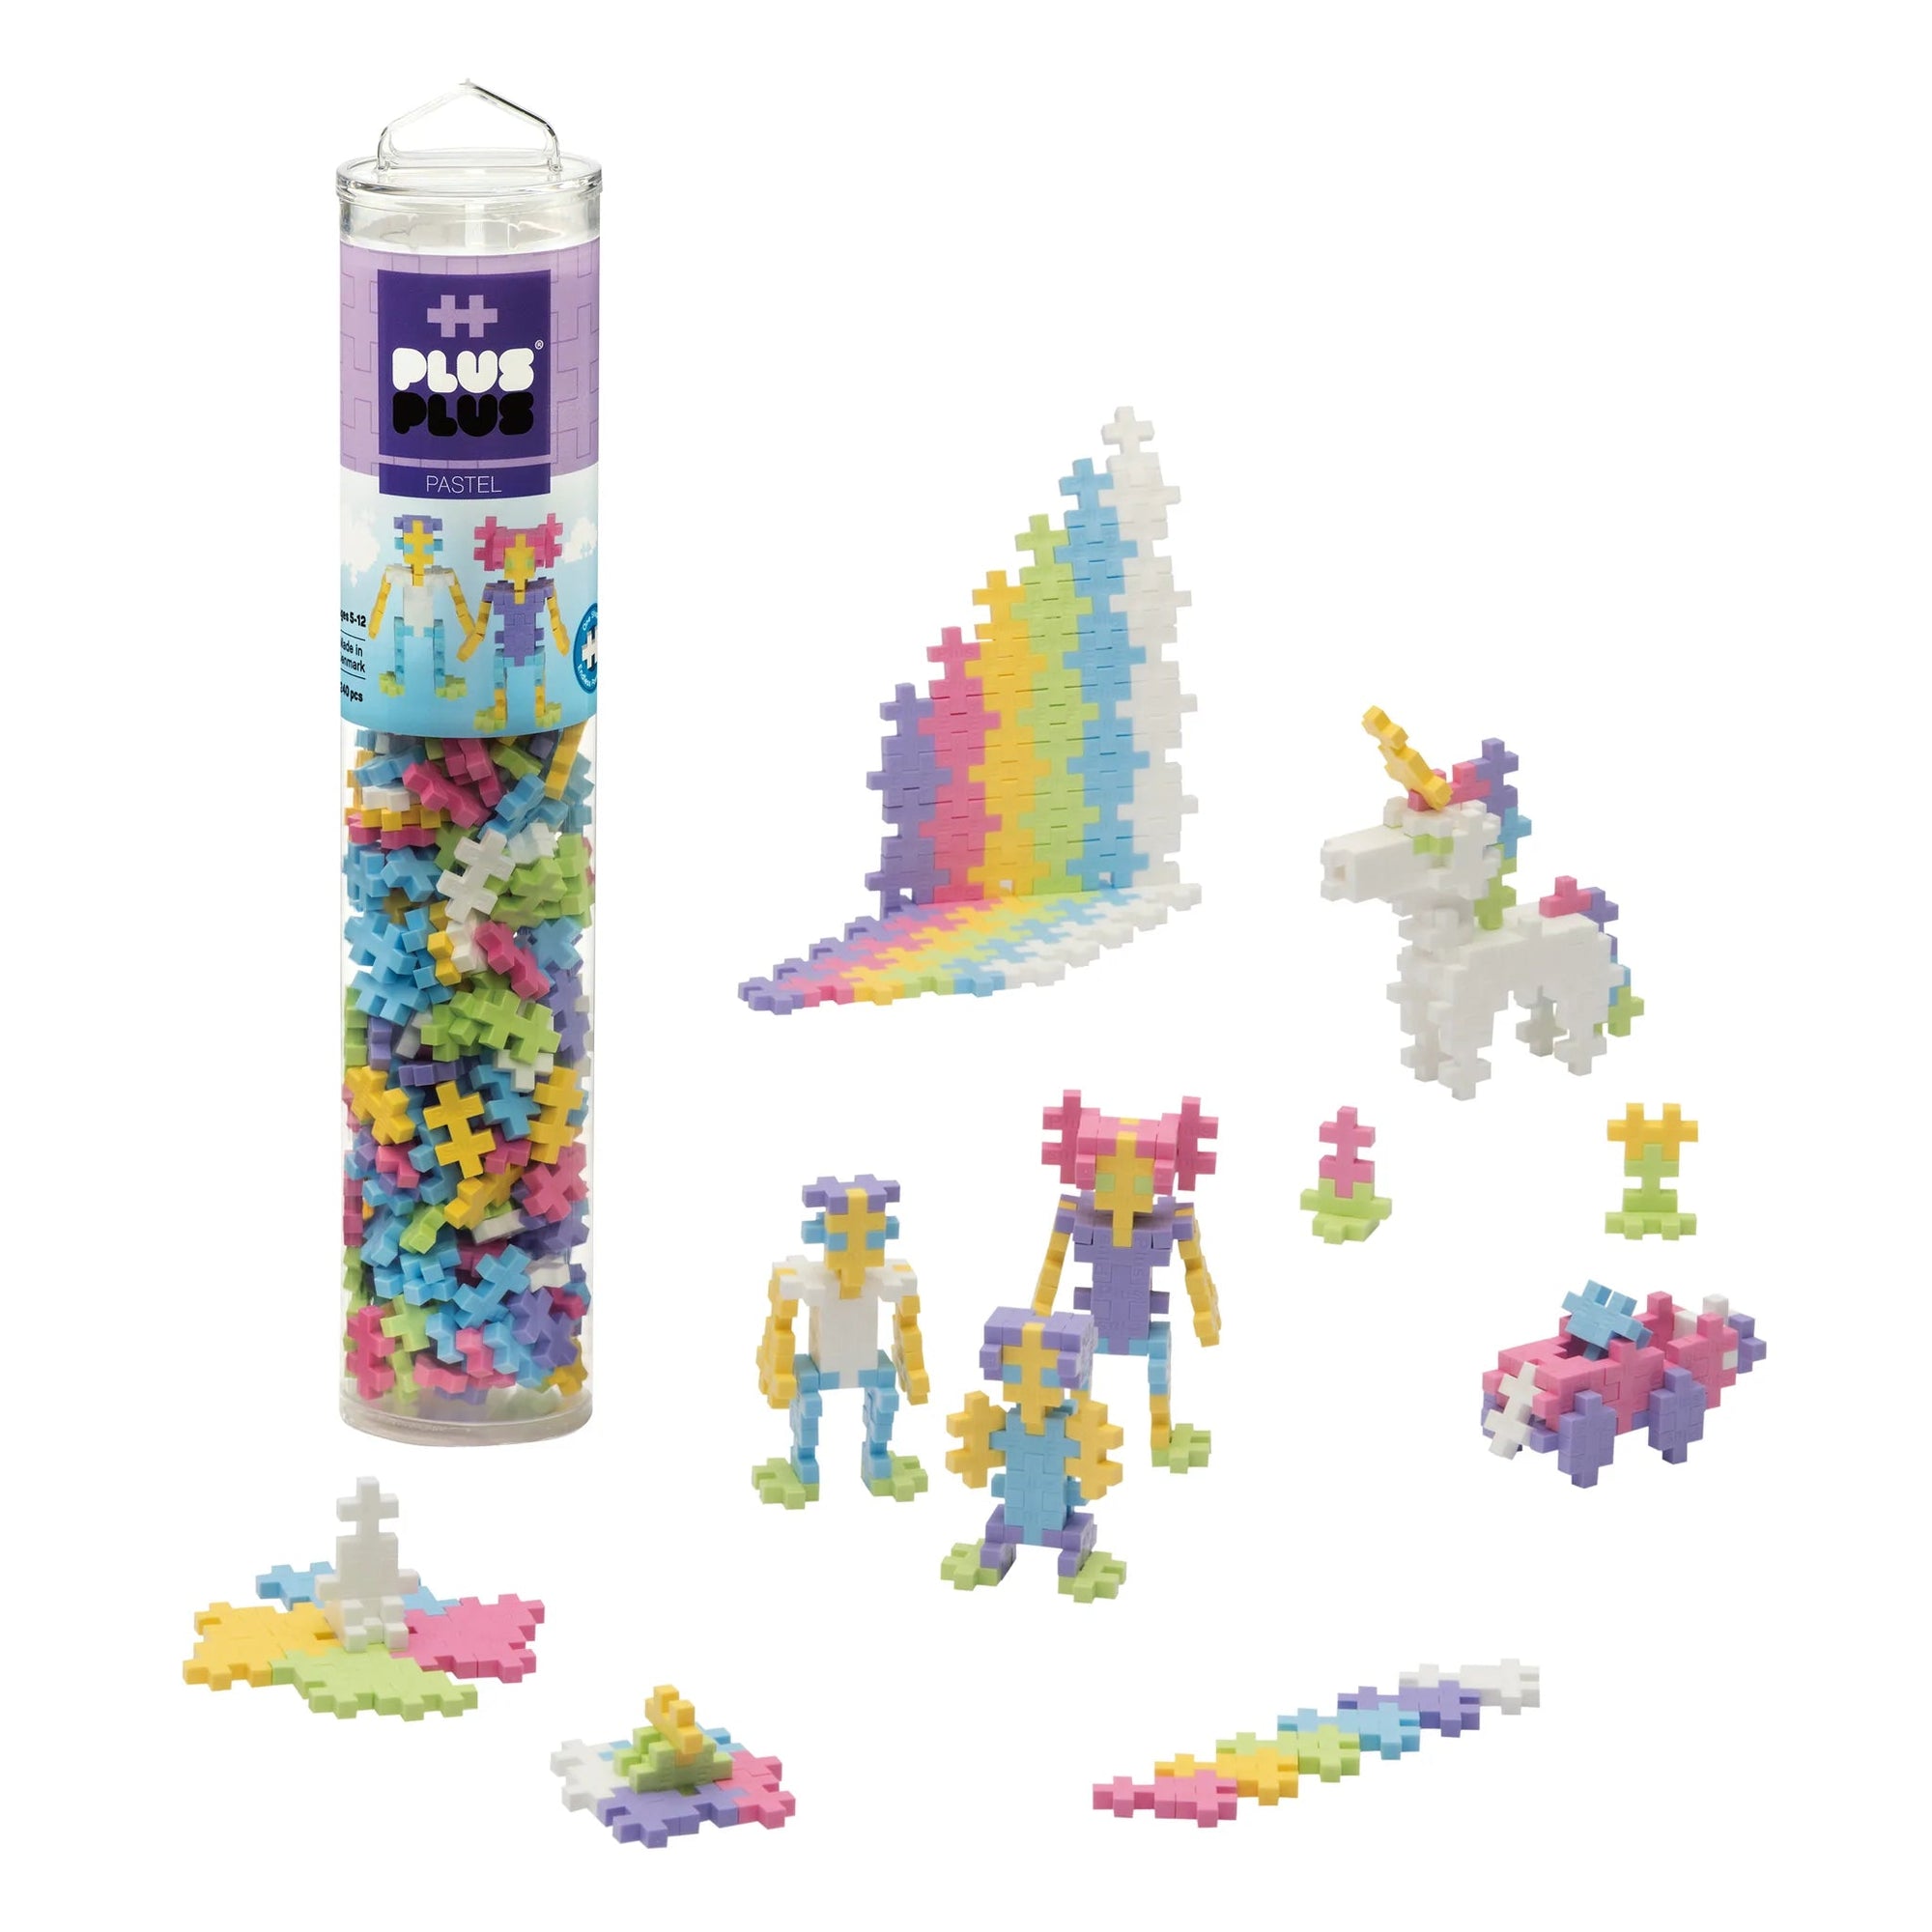 Puzzle By Number® - 250 pc Unicorn - Plus-Plus USA